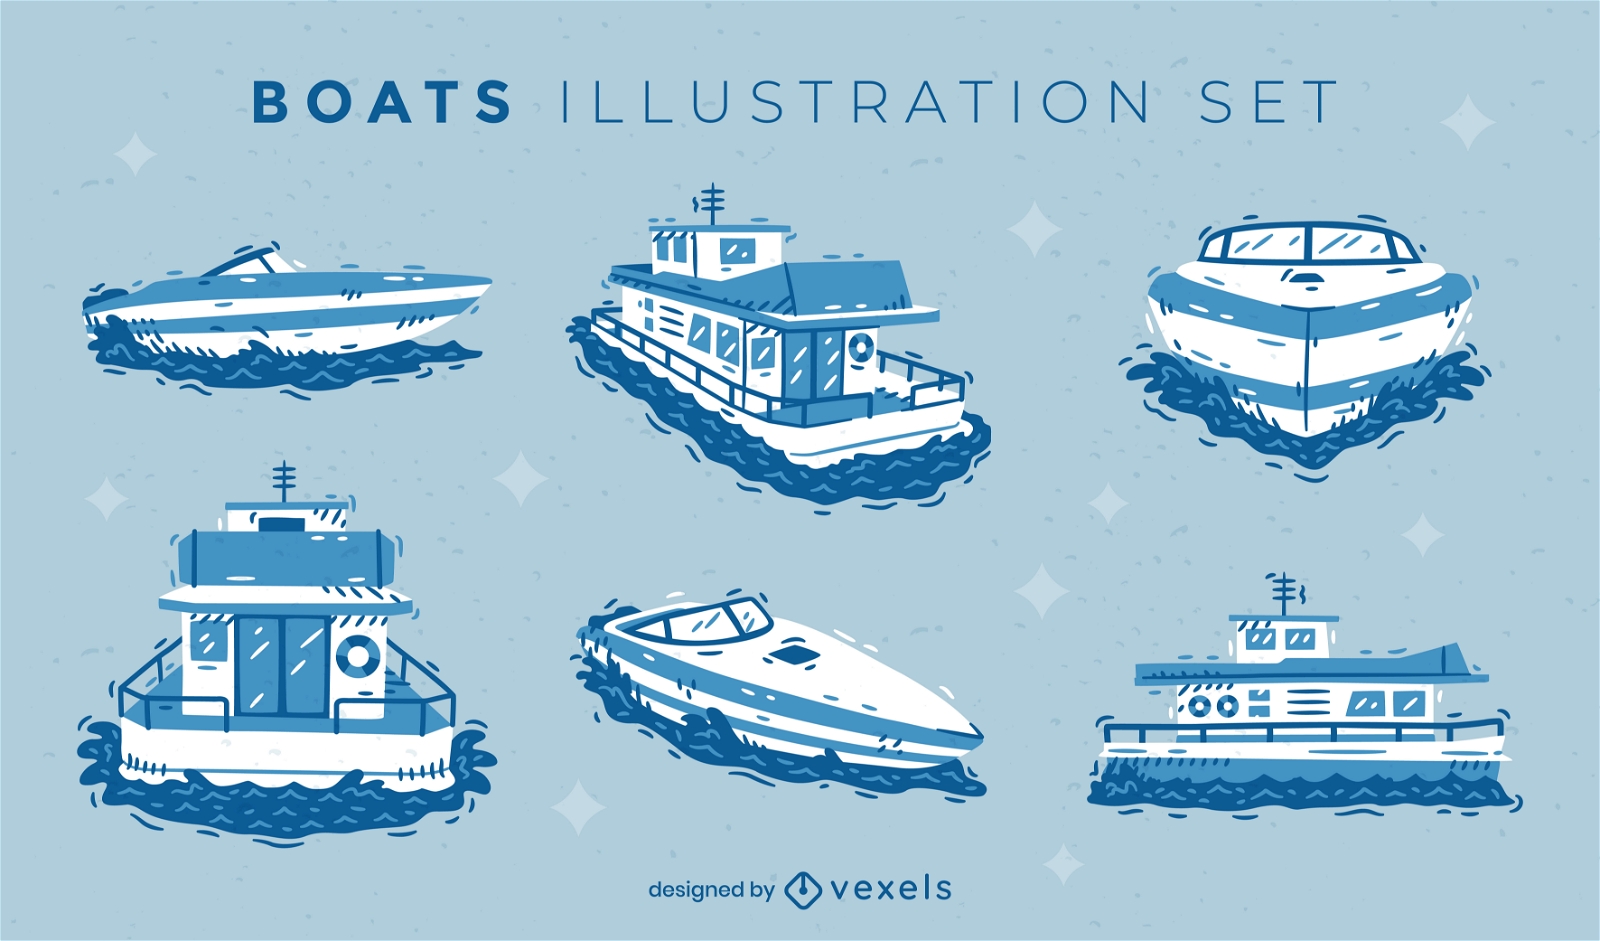 Boats illustrations set